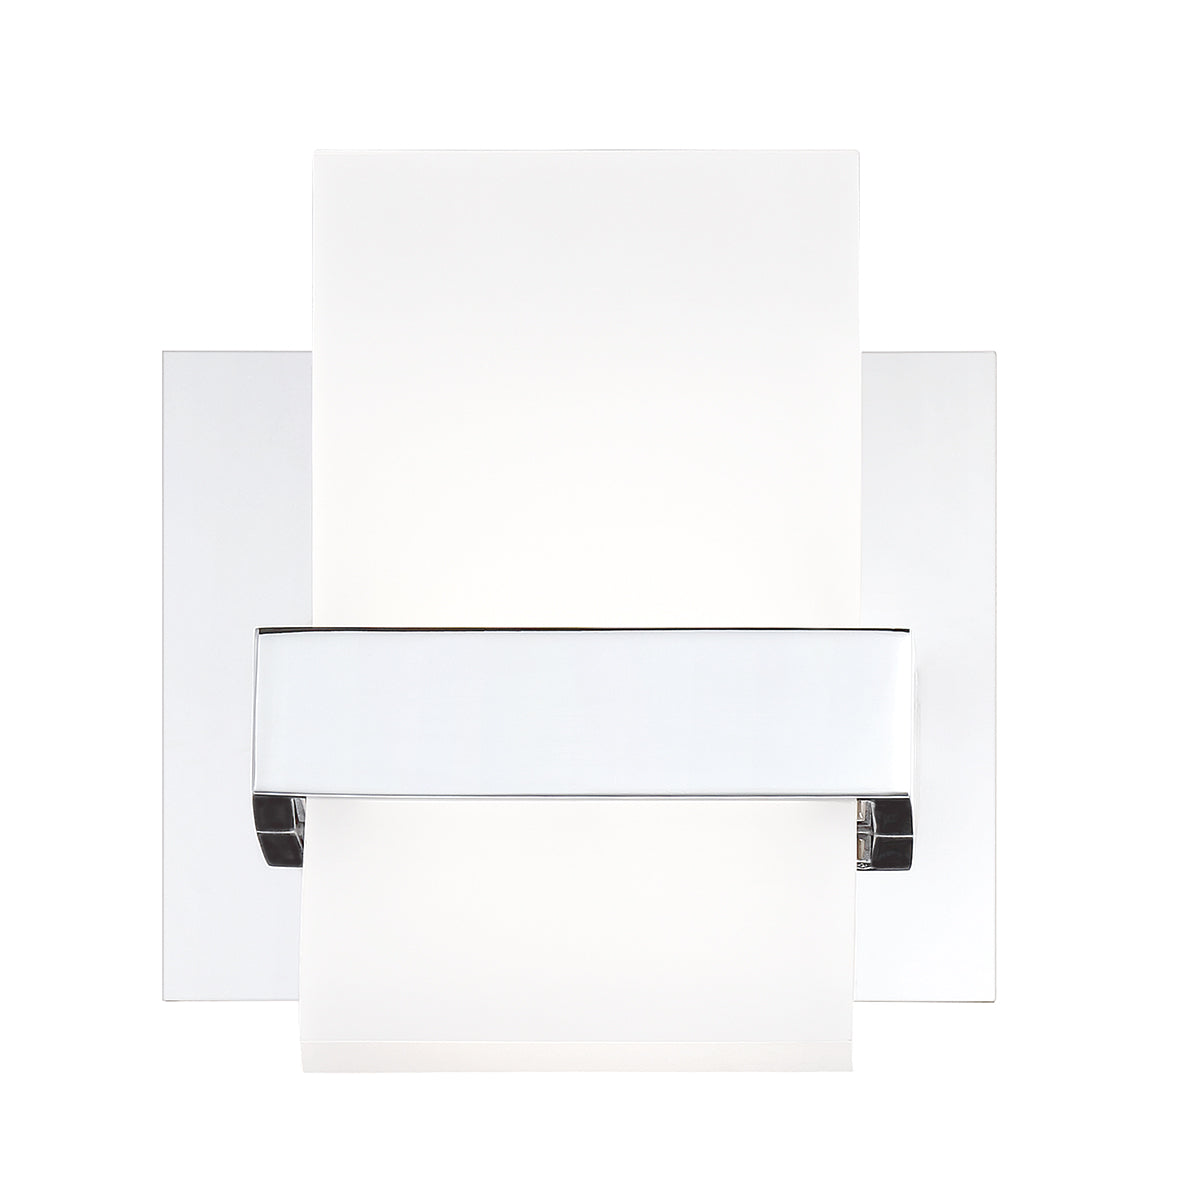 CAMBRIDGE Bathroom sconce Chrome - 35654-018 INTEGRATED LED | EUROFASE